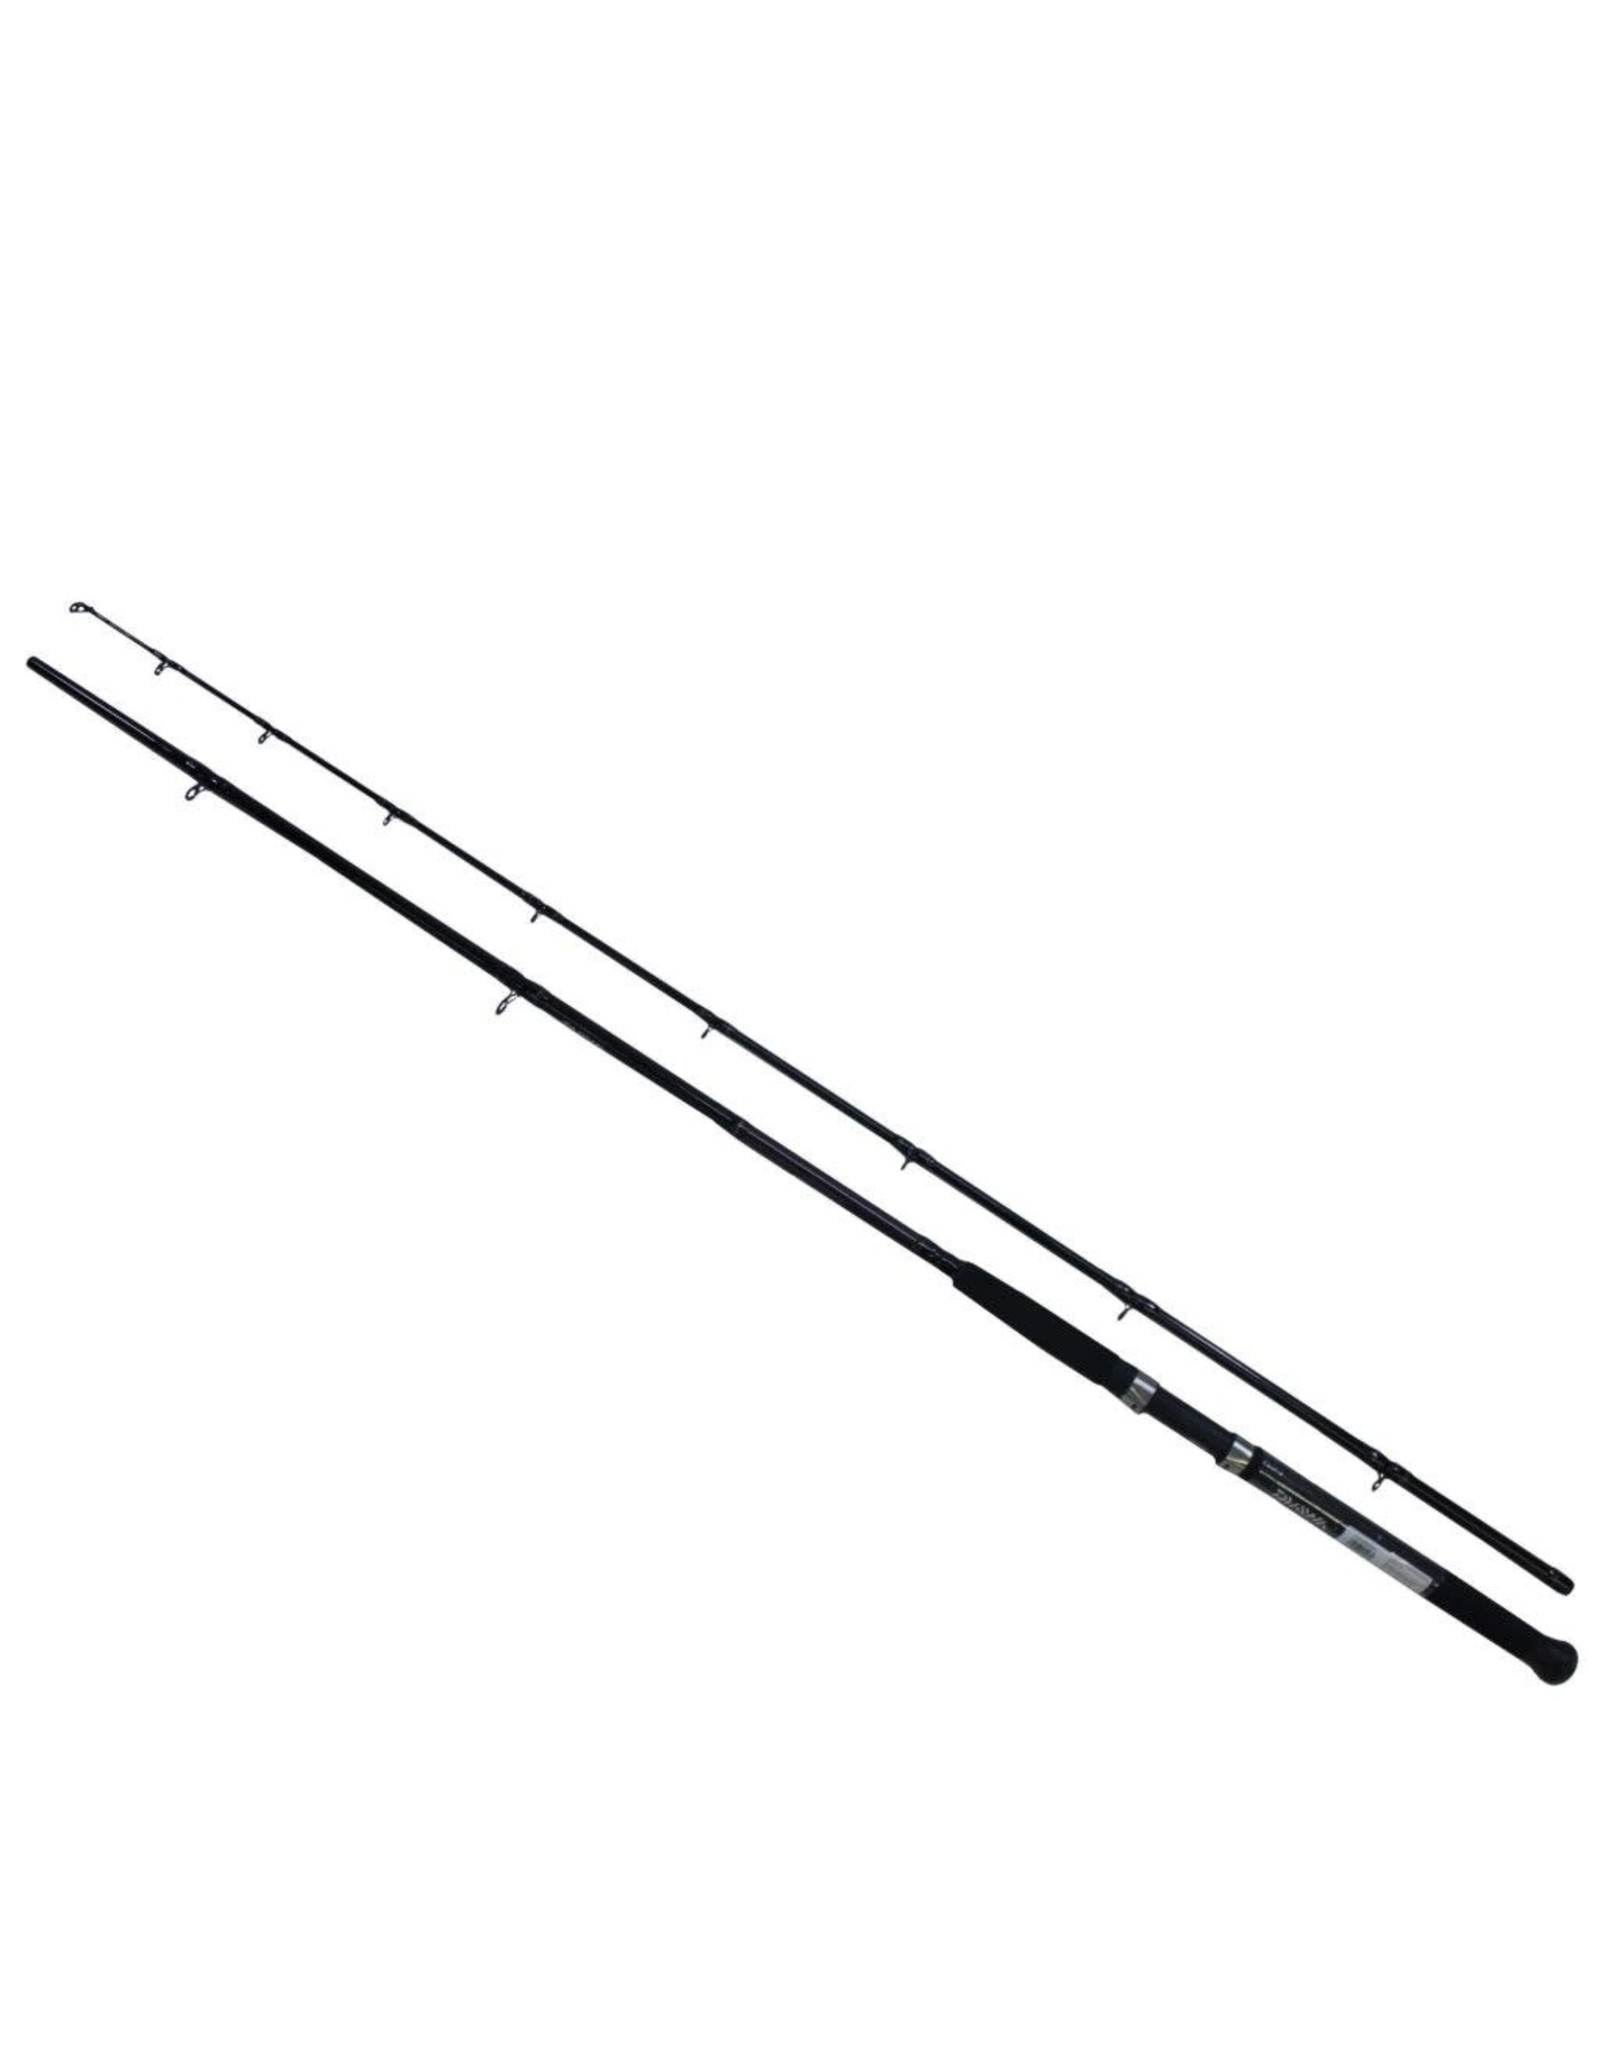 Daiwa Daiwa AccuDepth Trolling Rod – 9’6″ Length, 2 Piece Rod, 12-30 lb Line Rate, Heavy Power, Regular Action